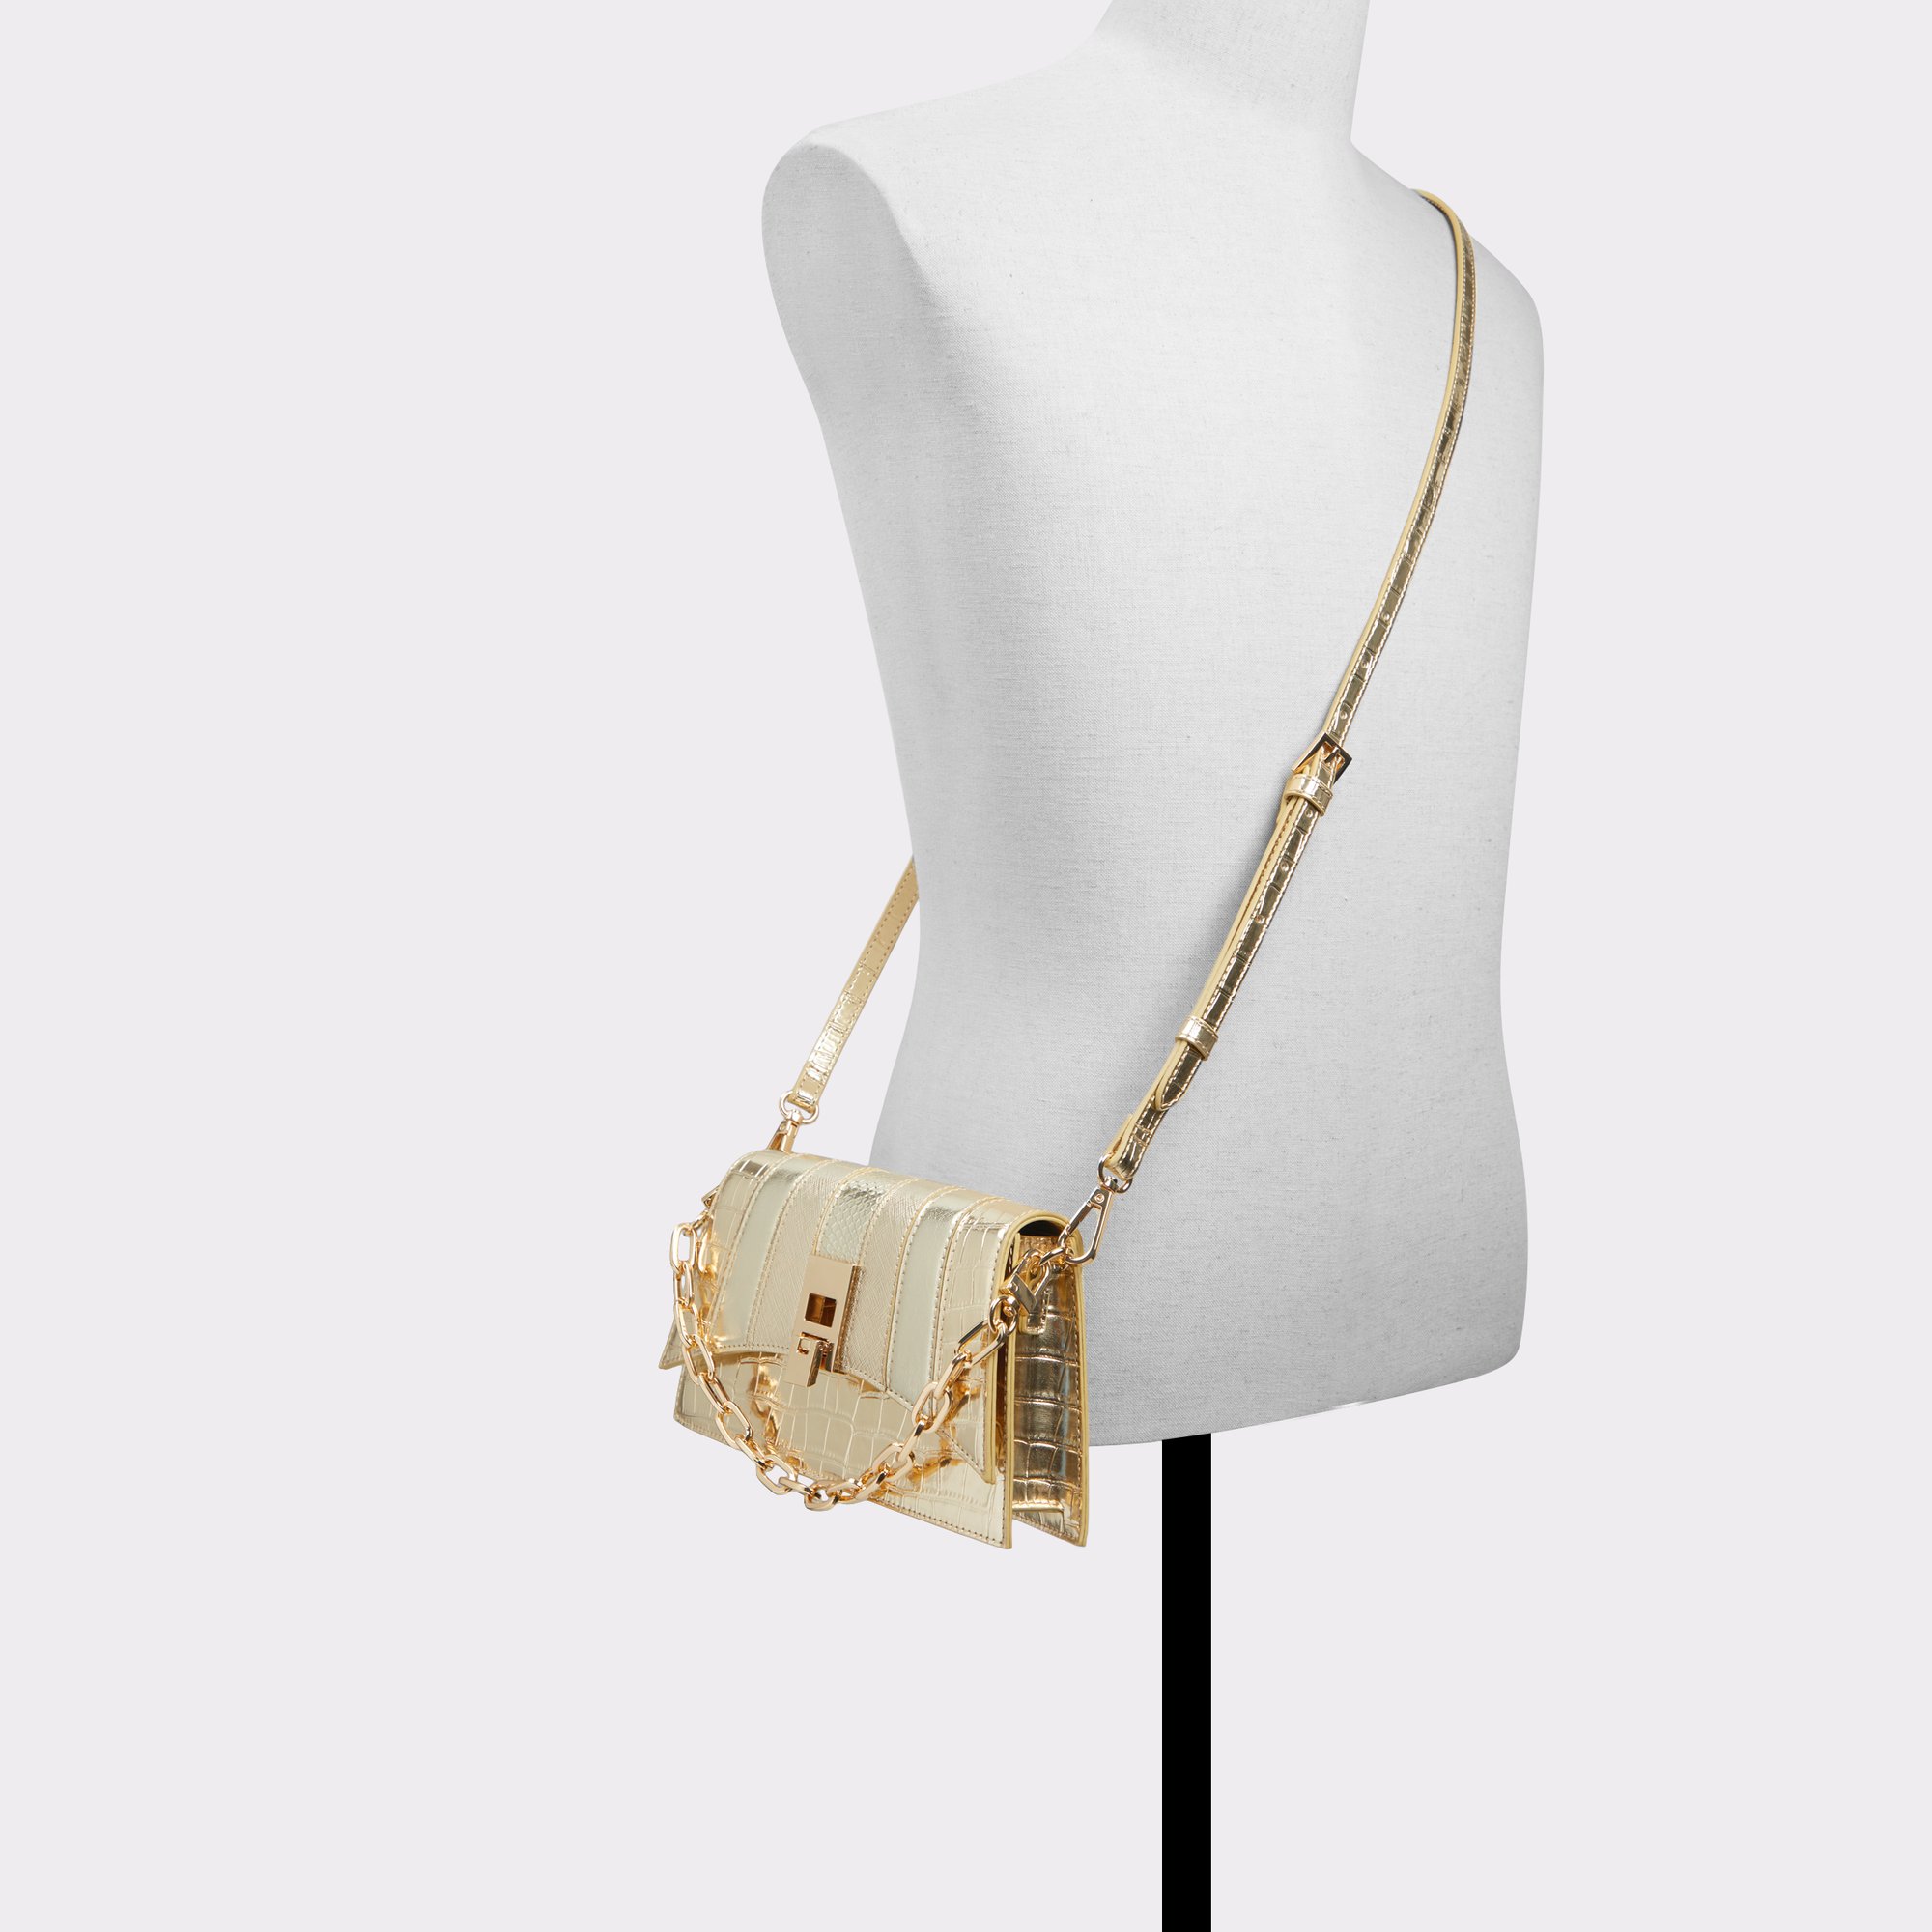 Ryannaax Gold Women's Clutches & Evening bags | ALDO US